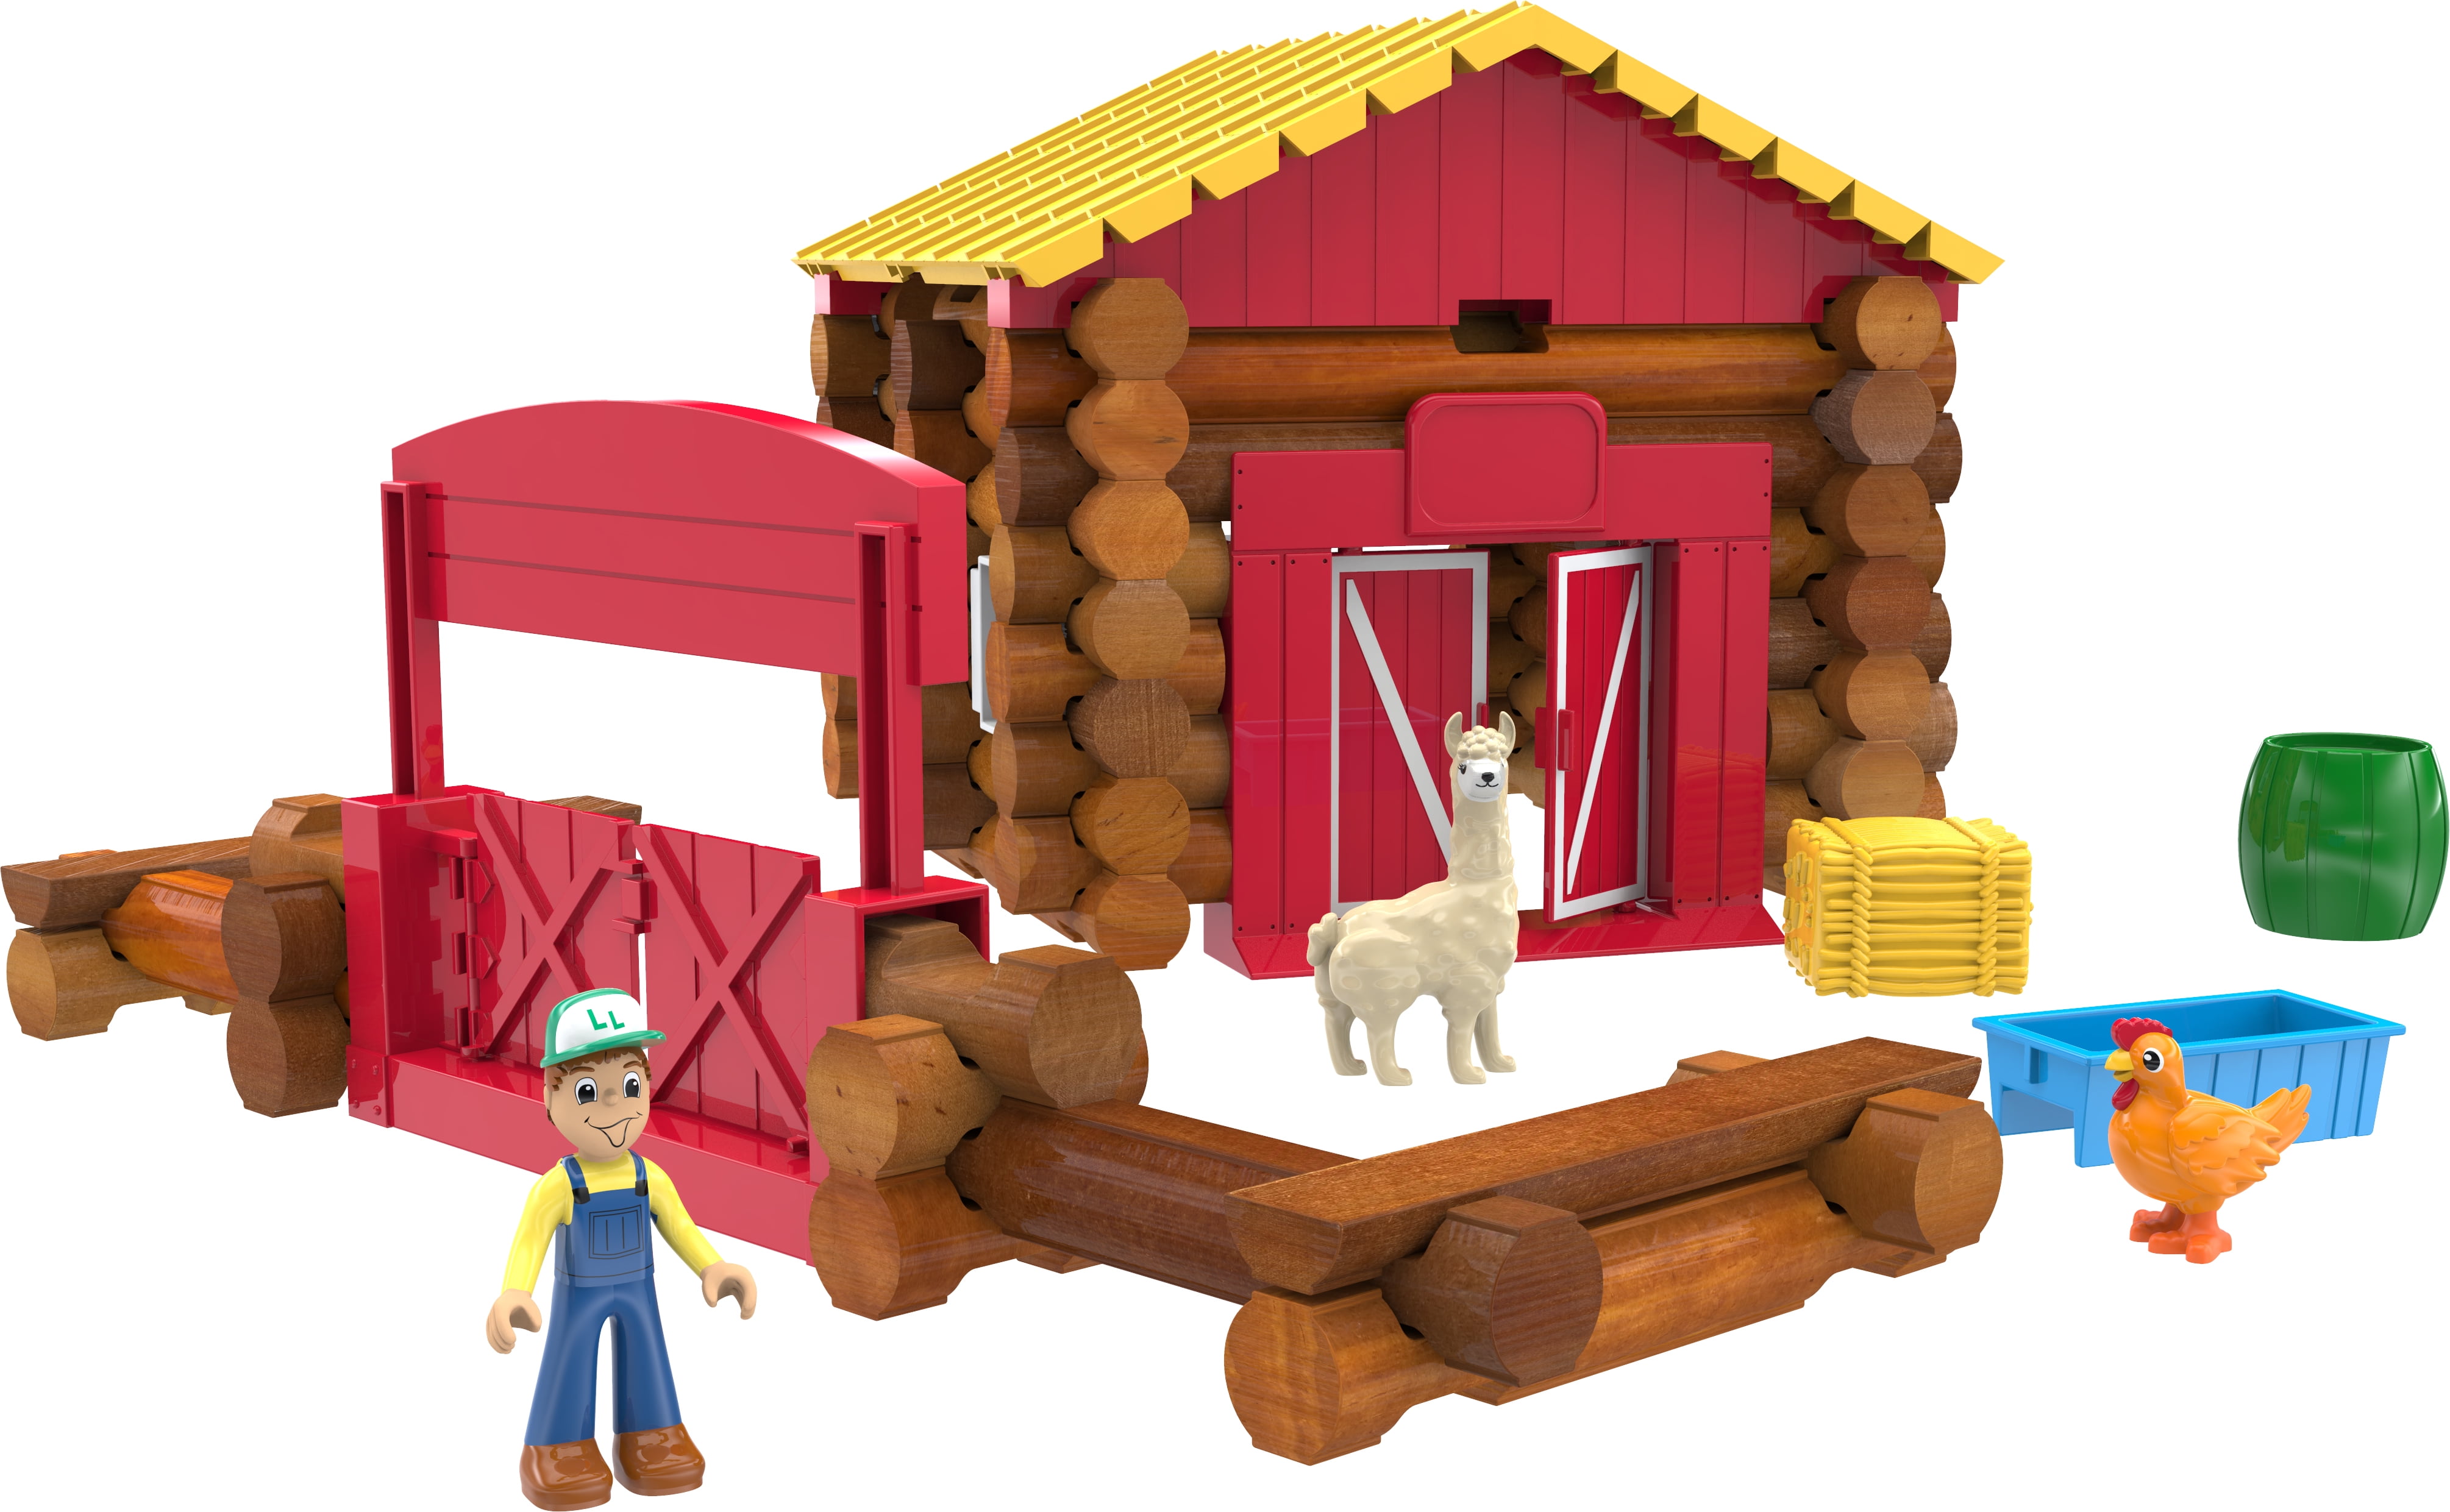 Ranch or Theme Park K'nex Lincoln Logs Hay/Straw Bale for Farm 